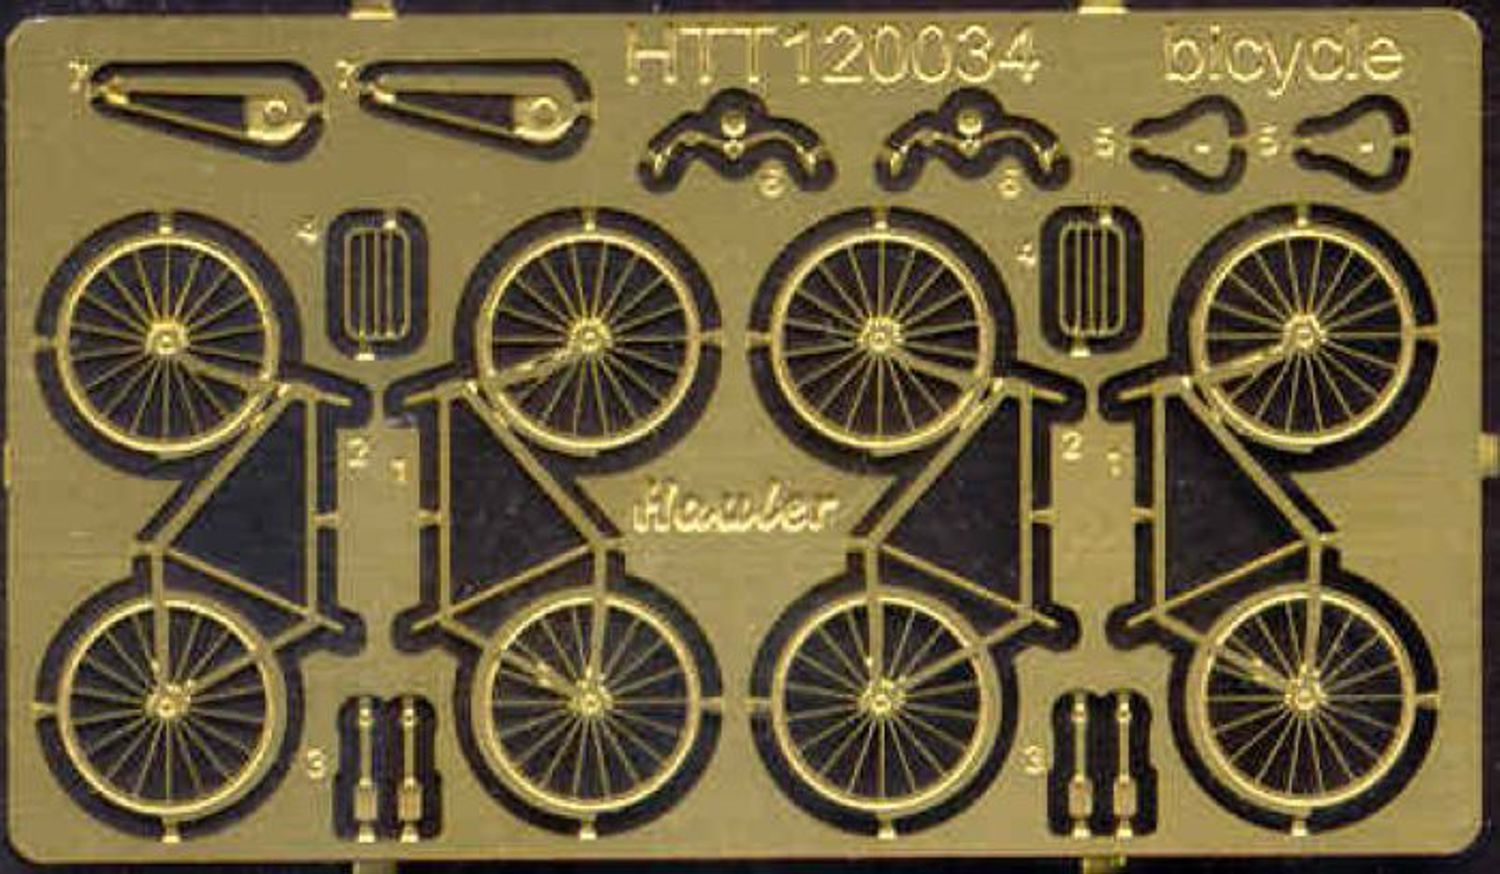 Hauler 120034 - Fahrräder